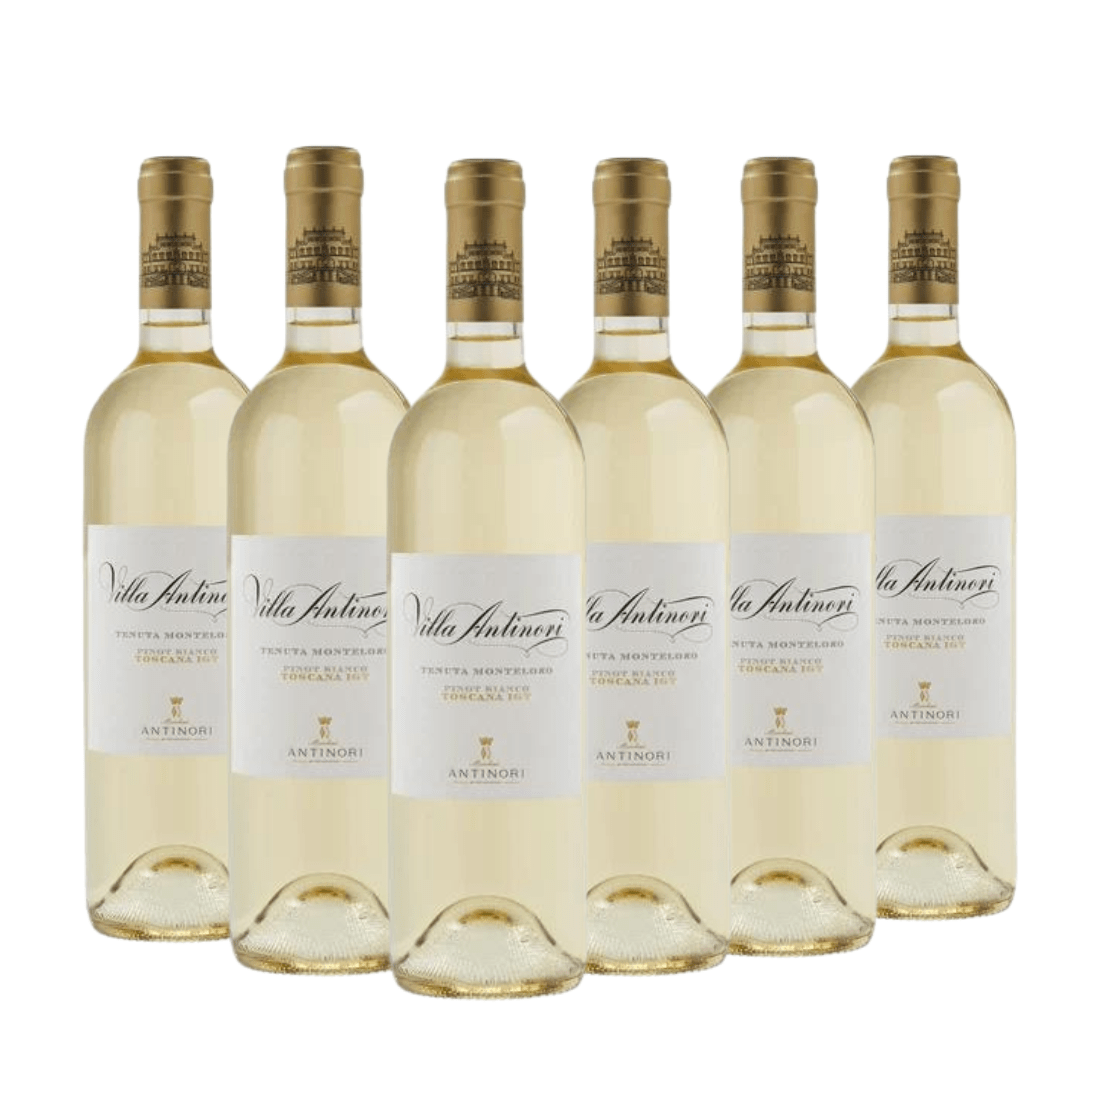 Antinori Villa Antinori 2022 Igt Pinot Bianco 6 bottiglie - Antinori